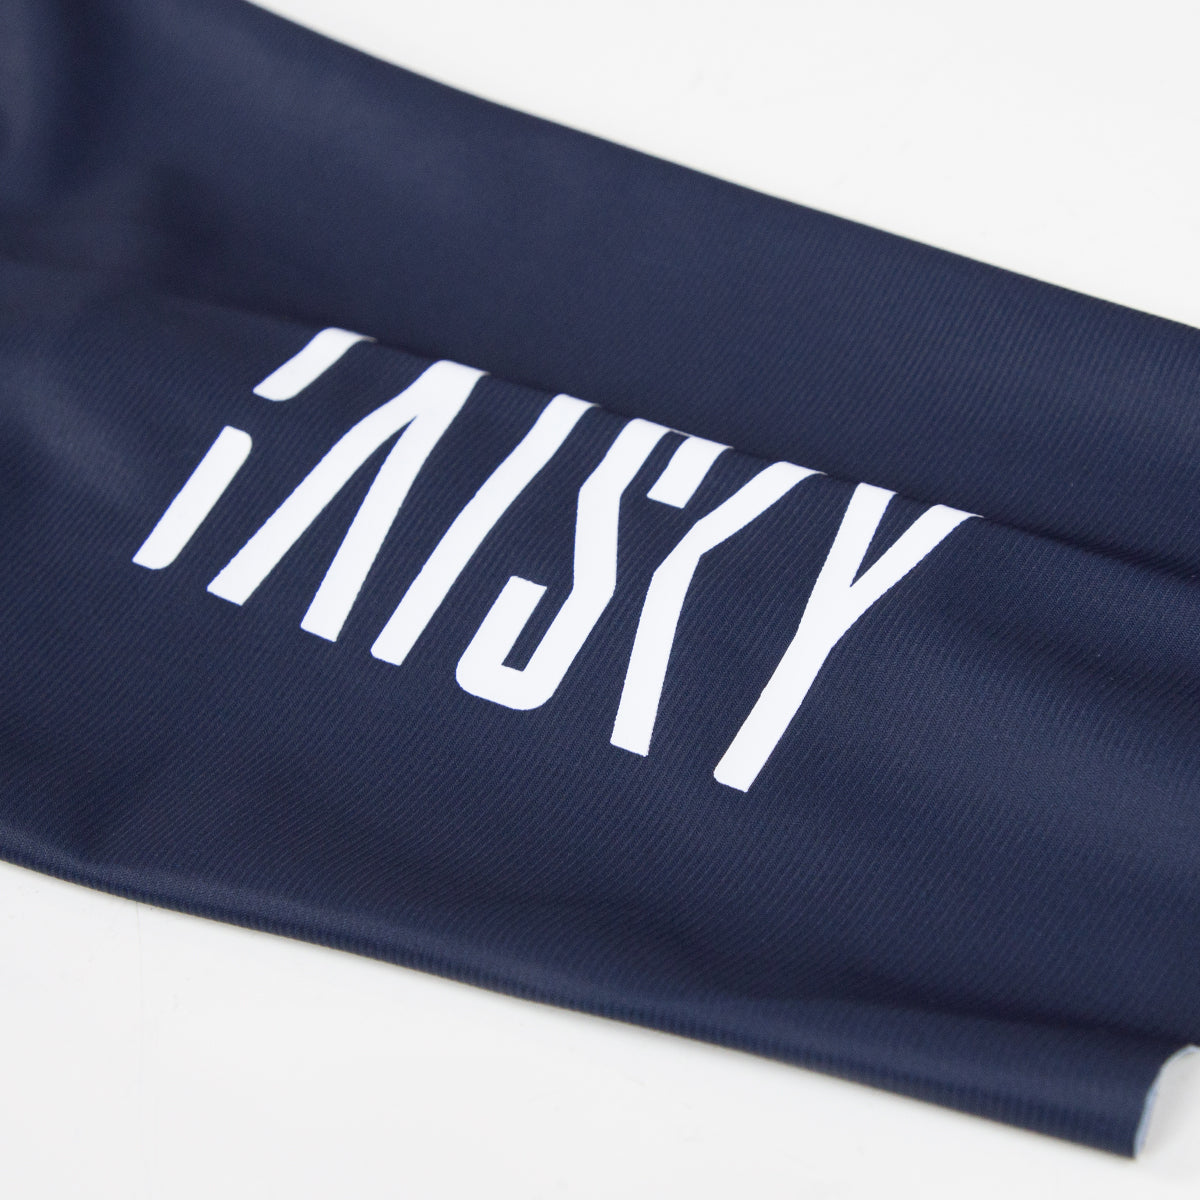 Baisky Premium Cycling Jersey For Women - TRWSJ1180 Purity Dark Blue